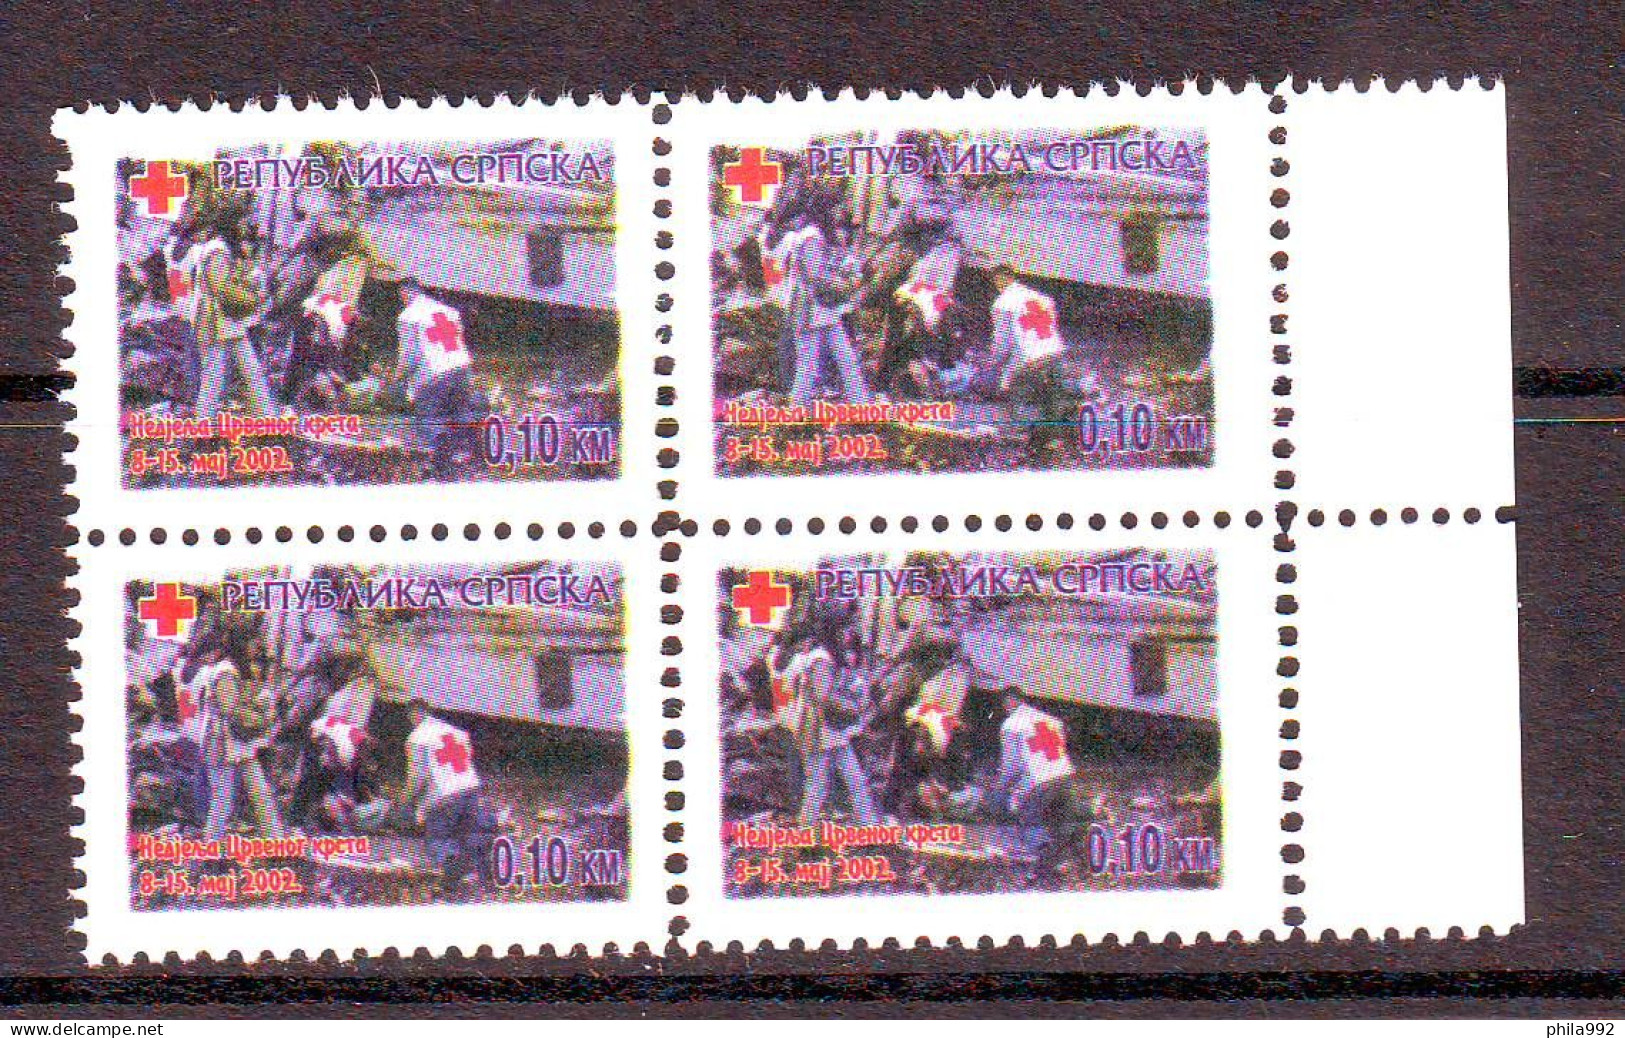 Bosnia:Republika Srpska 2002  Charity Stamp Red Cross  Mi.No.10 Self Adhesive Block Of 4 MNH - Bosnie-Herzegovine